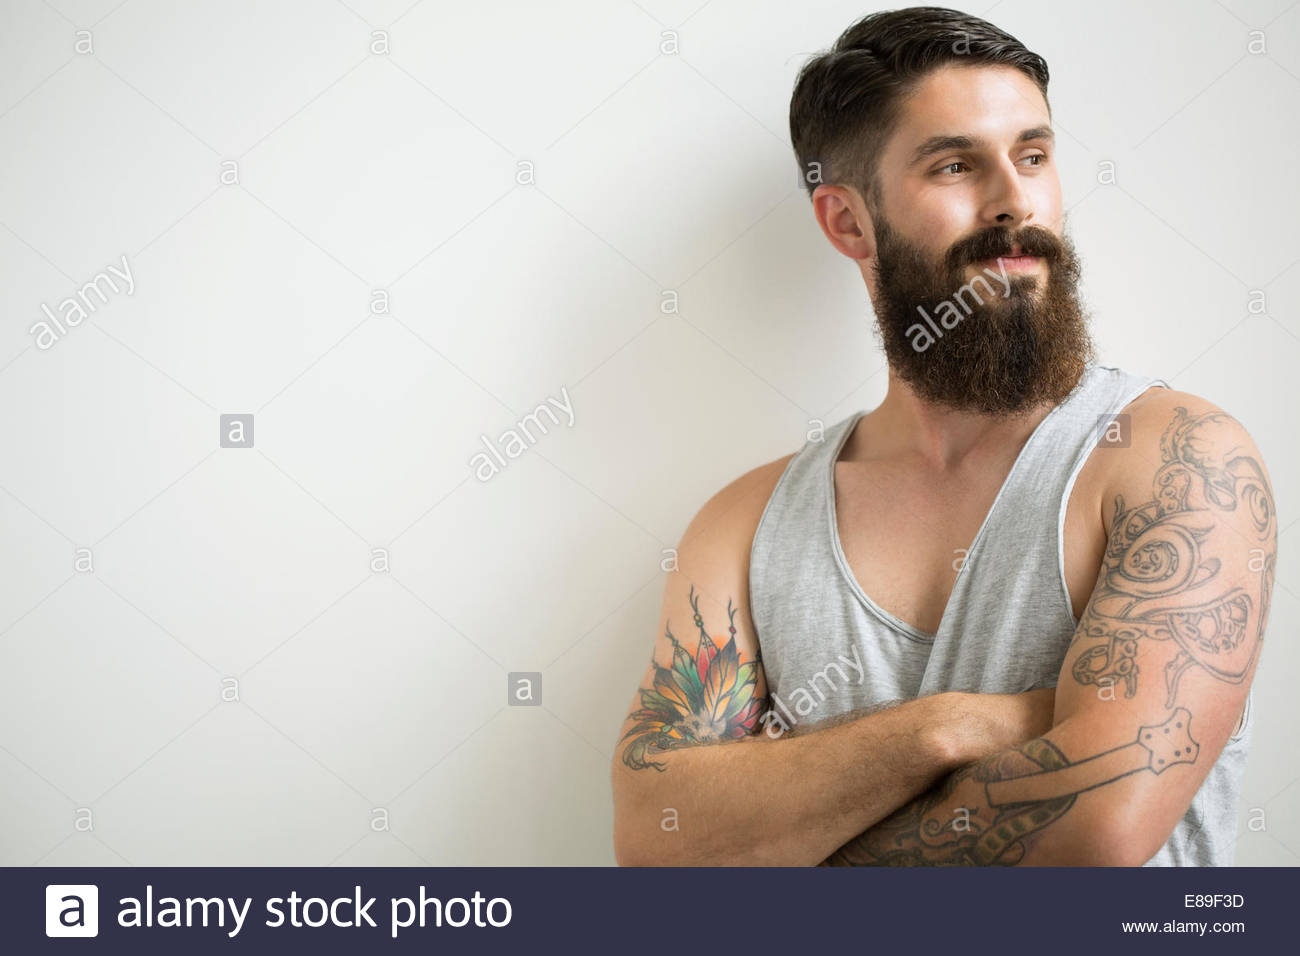 Beard man tattoo hi-res stock photography and images - Alamy